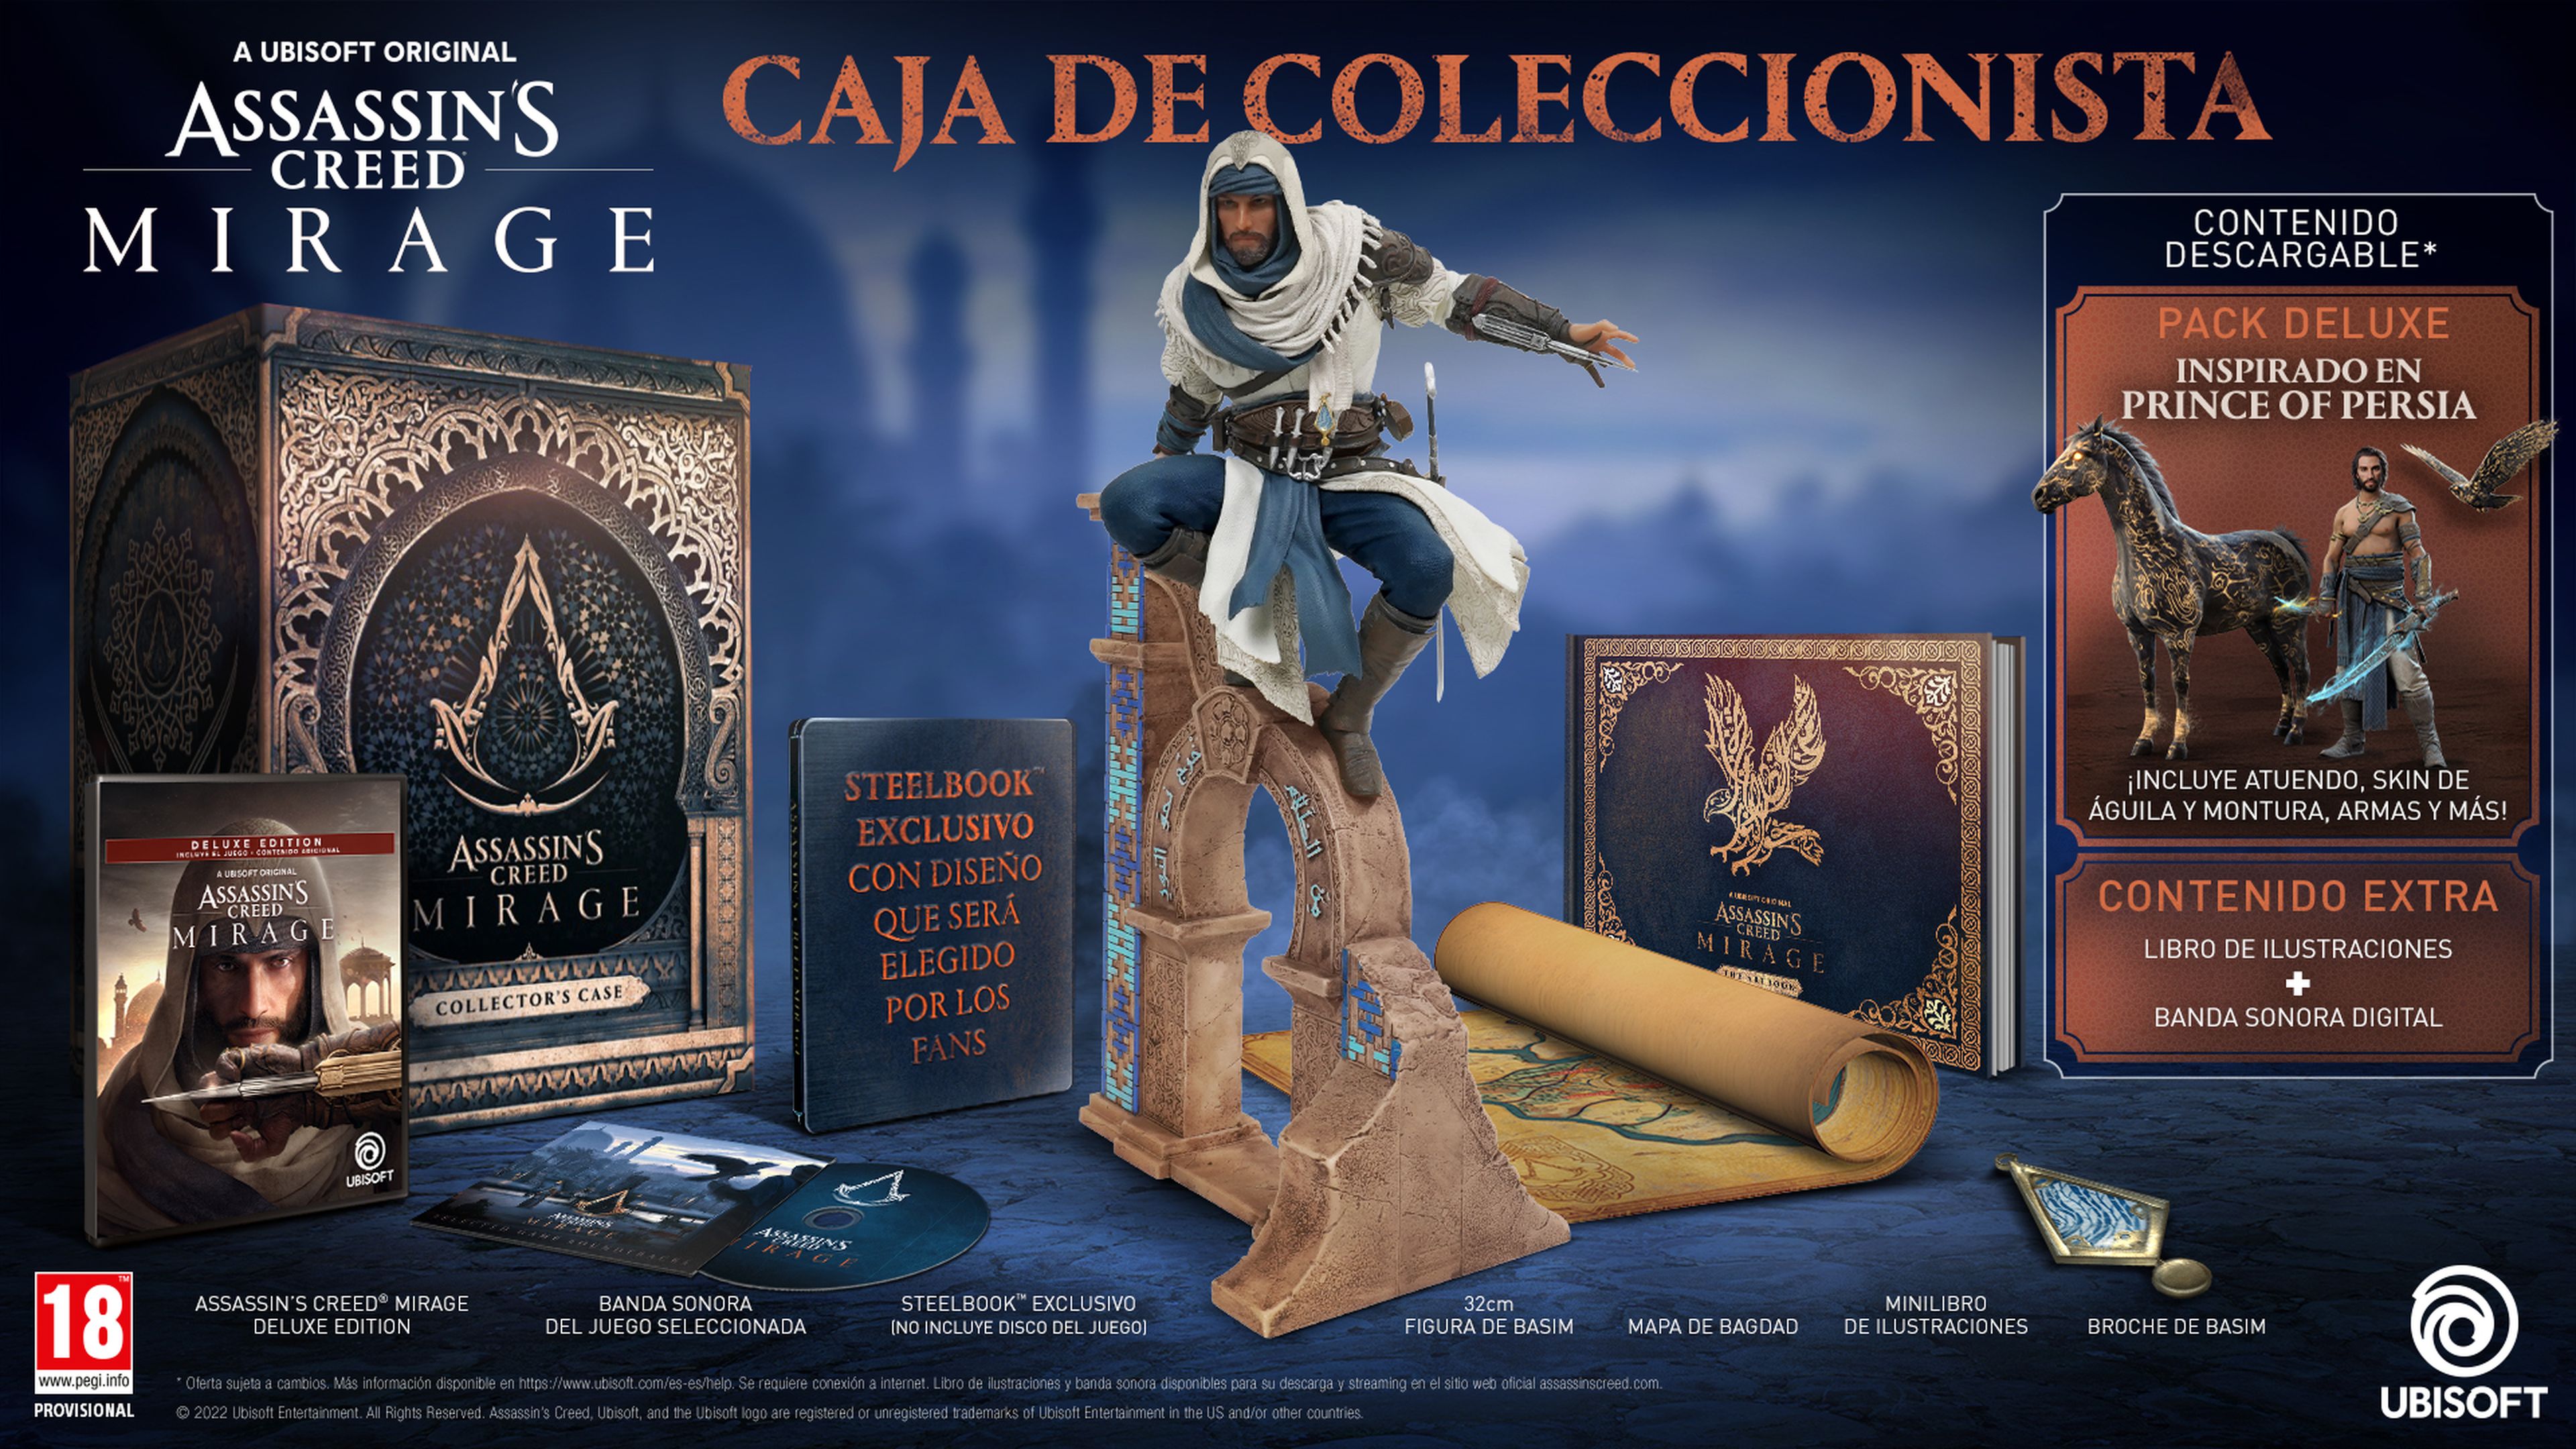 Assassin's Creed Mirage Caja de Coleccionista